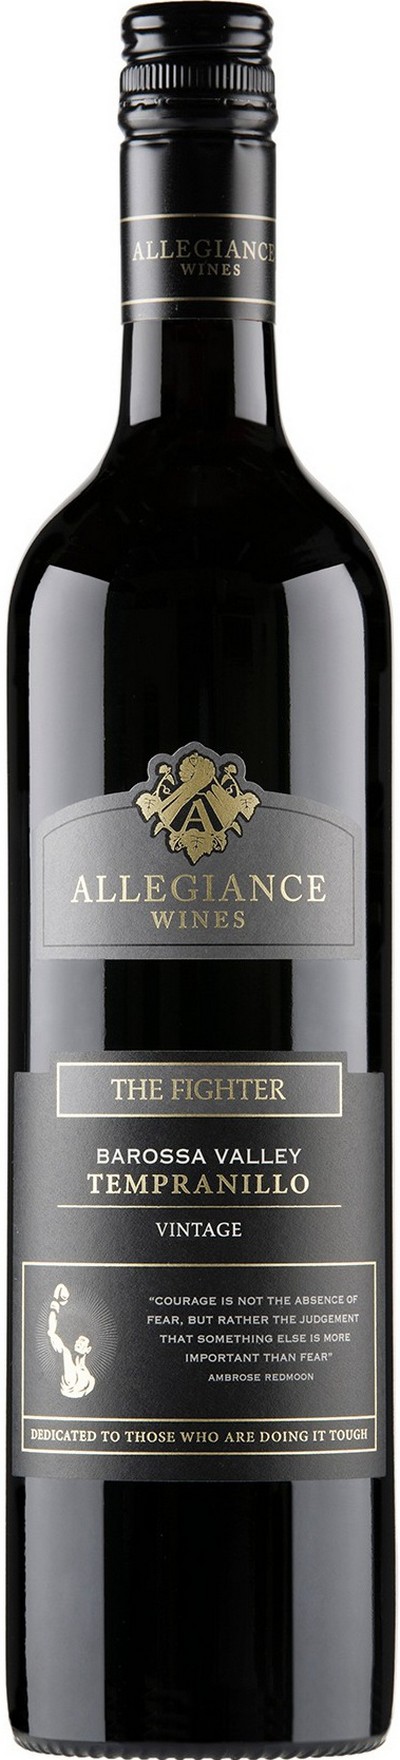 allegiance-wines-the-fighter-barossa-valley-tempranillo-2017